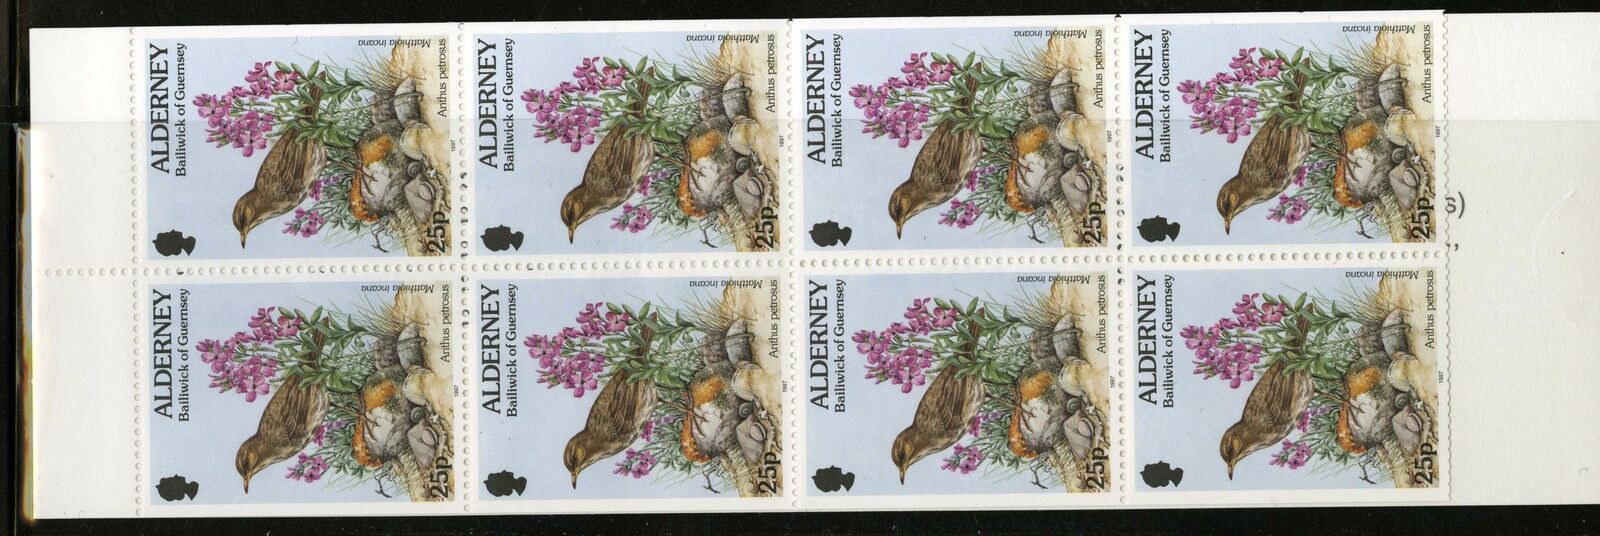 Alderney 1997 - Pasari, 8 timbre in carnet